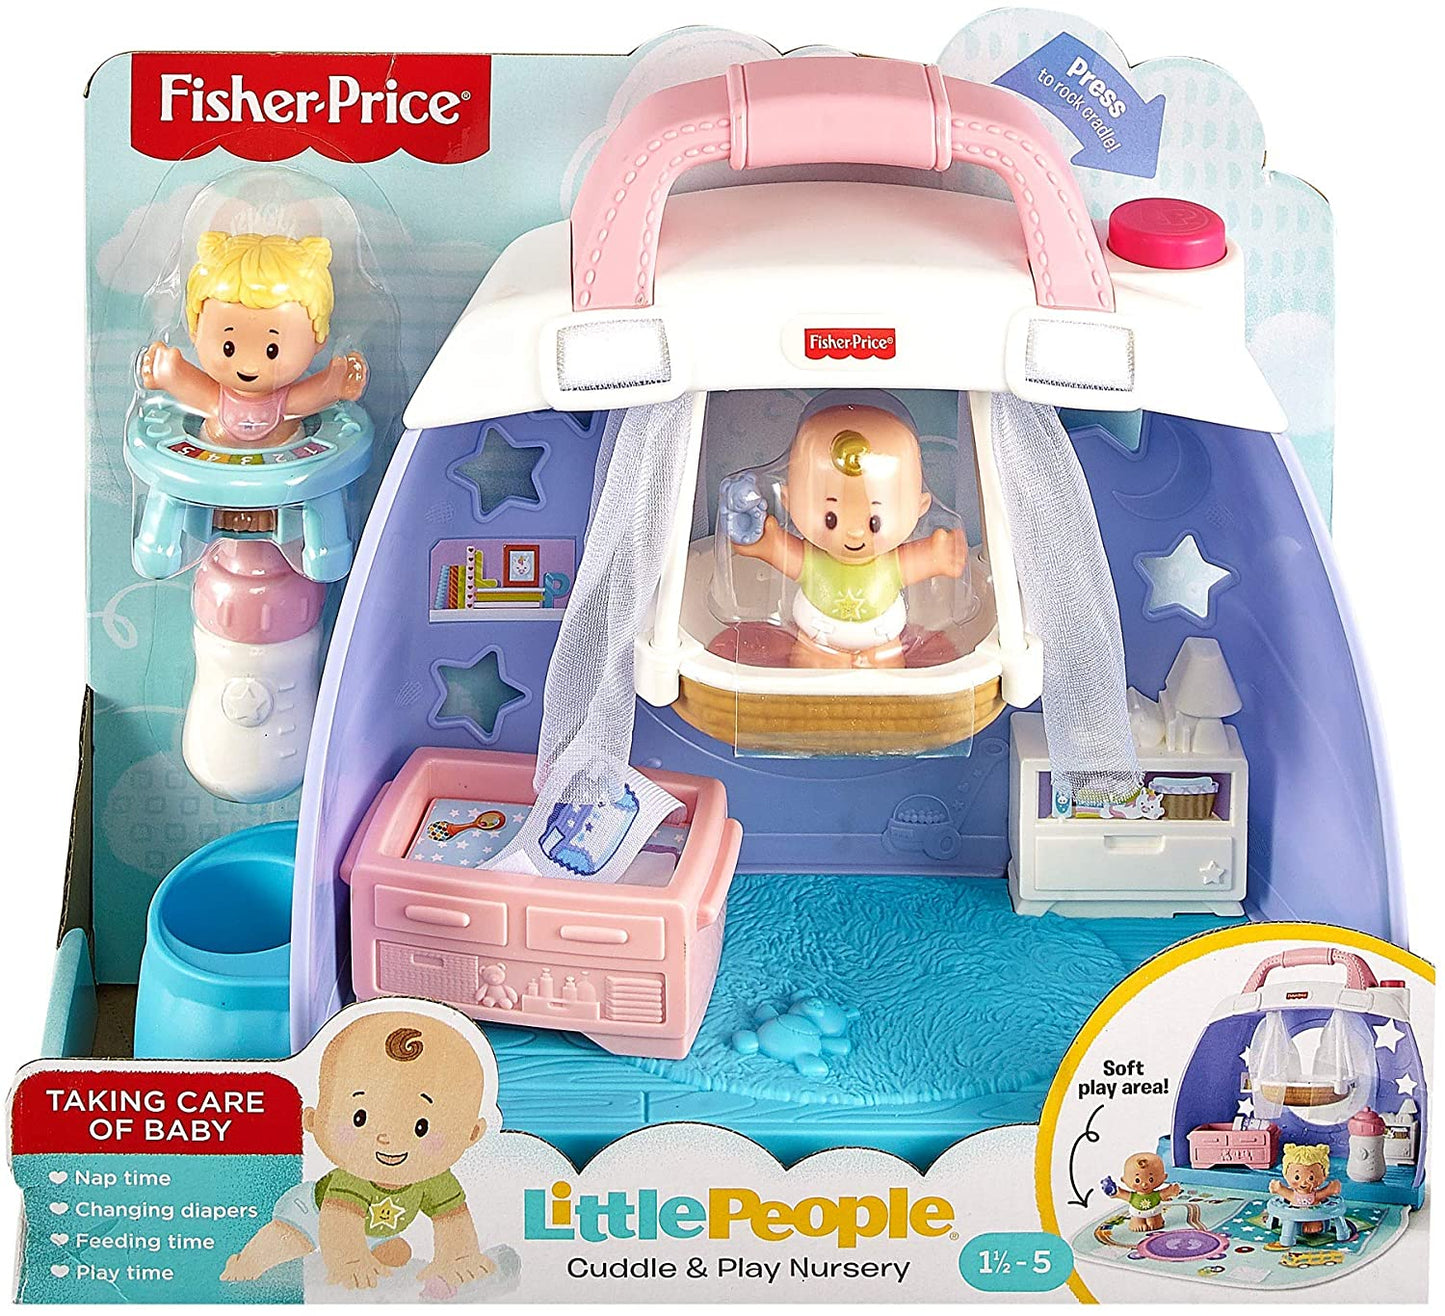 Fisher-Price GKP70 - Little People Cuddle & Play Nursery